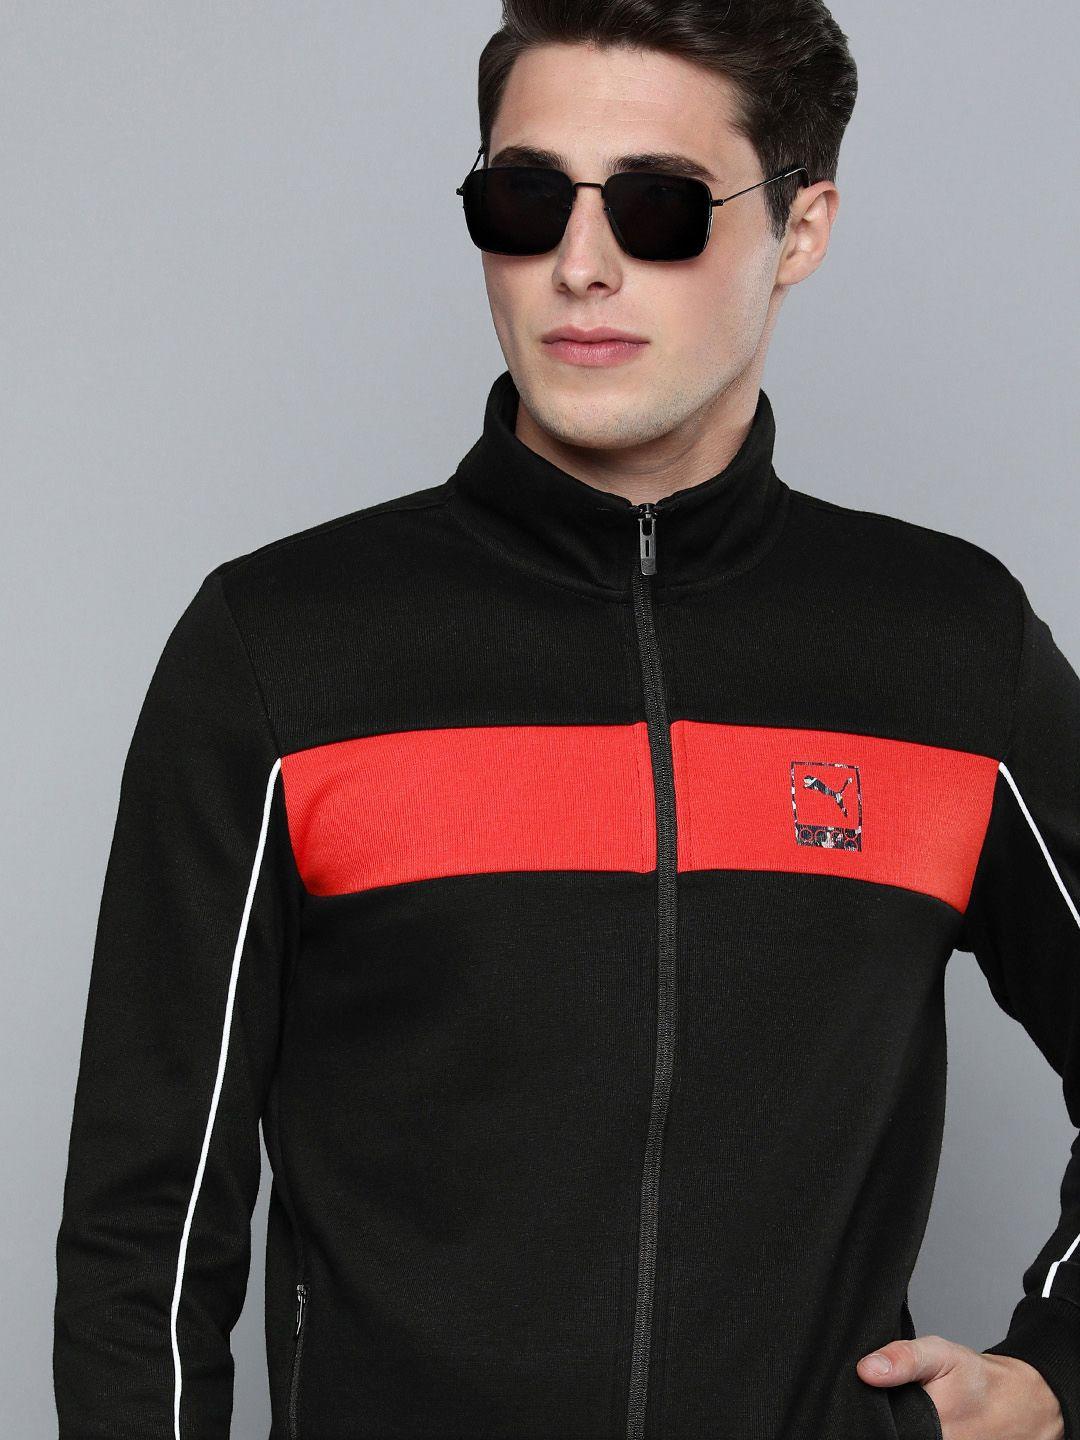 one8 x puma men black red colourblocked full-zip sporty jacket